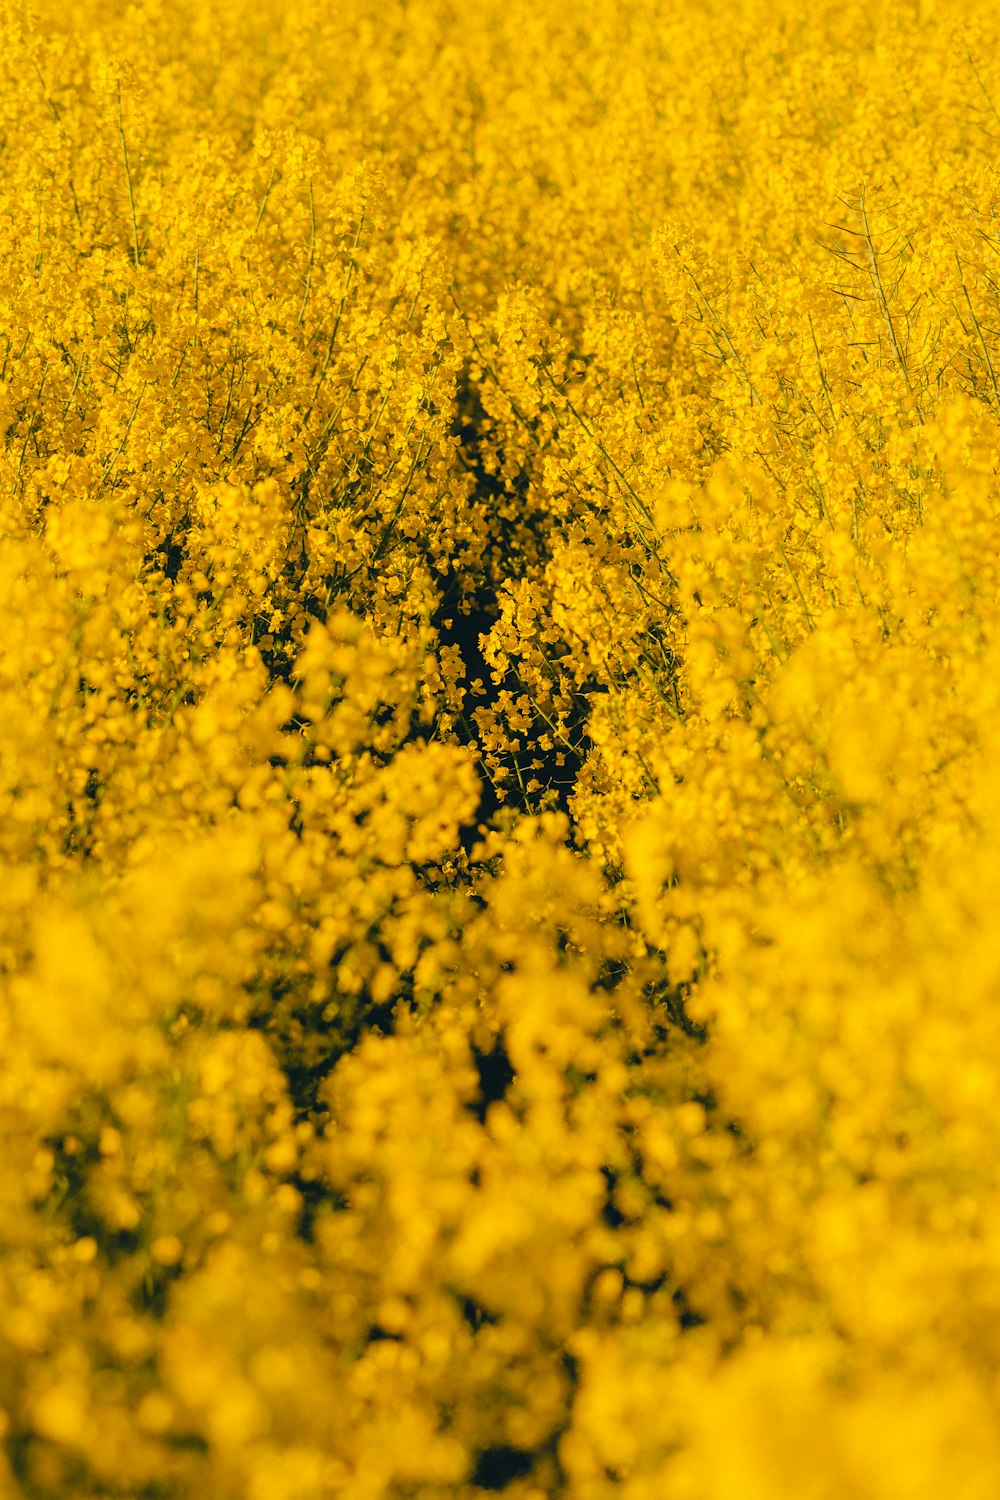 yellow flower field during daytime